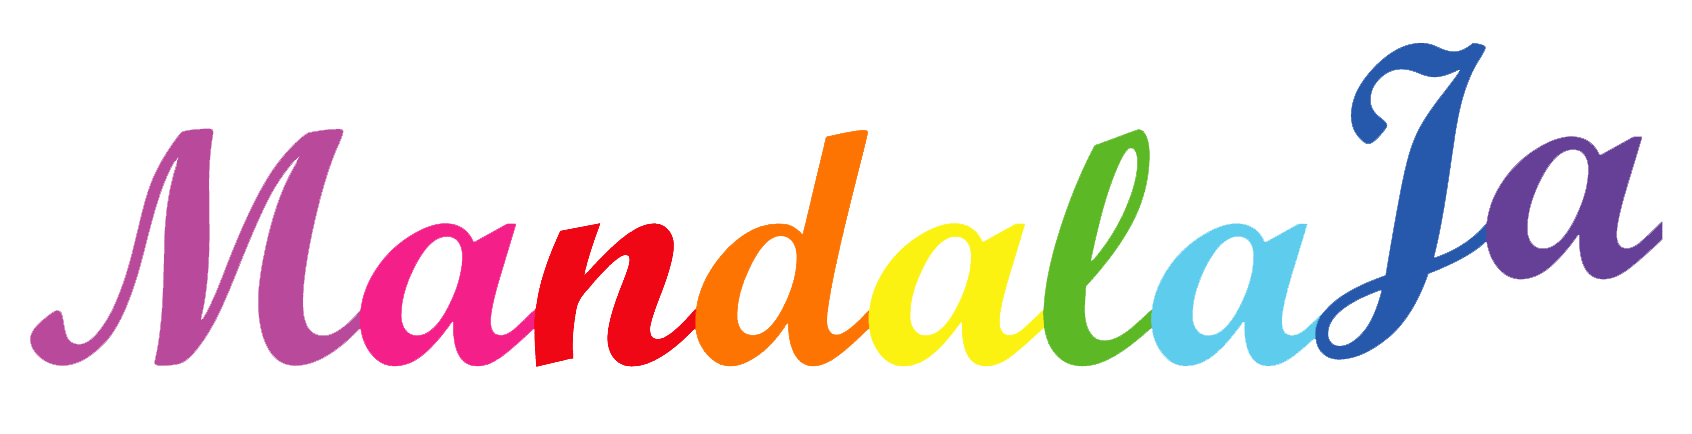 mandalaja logo duha pru.png